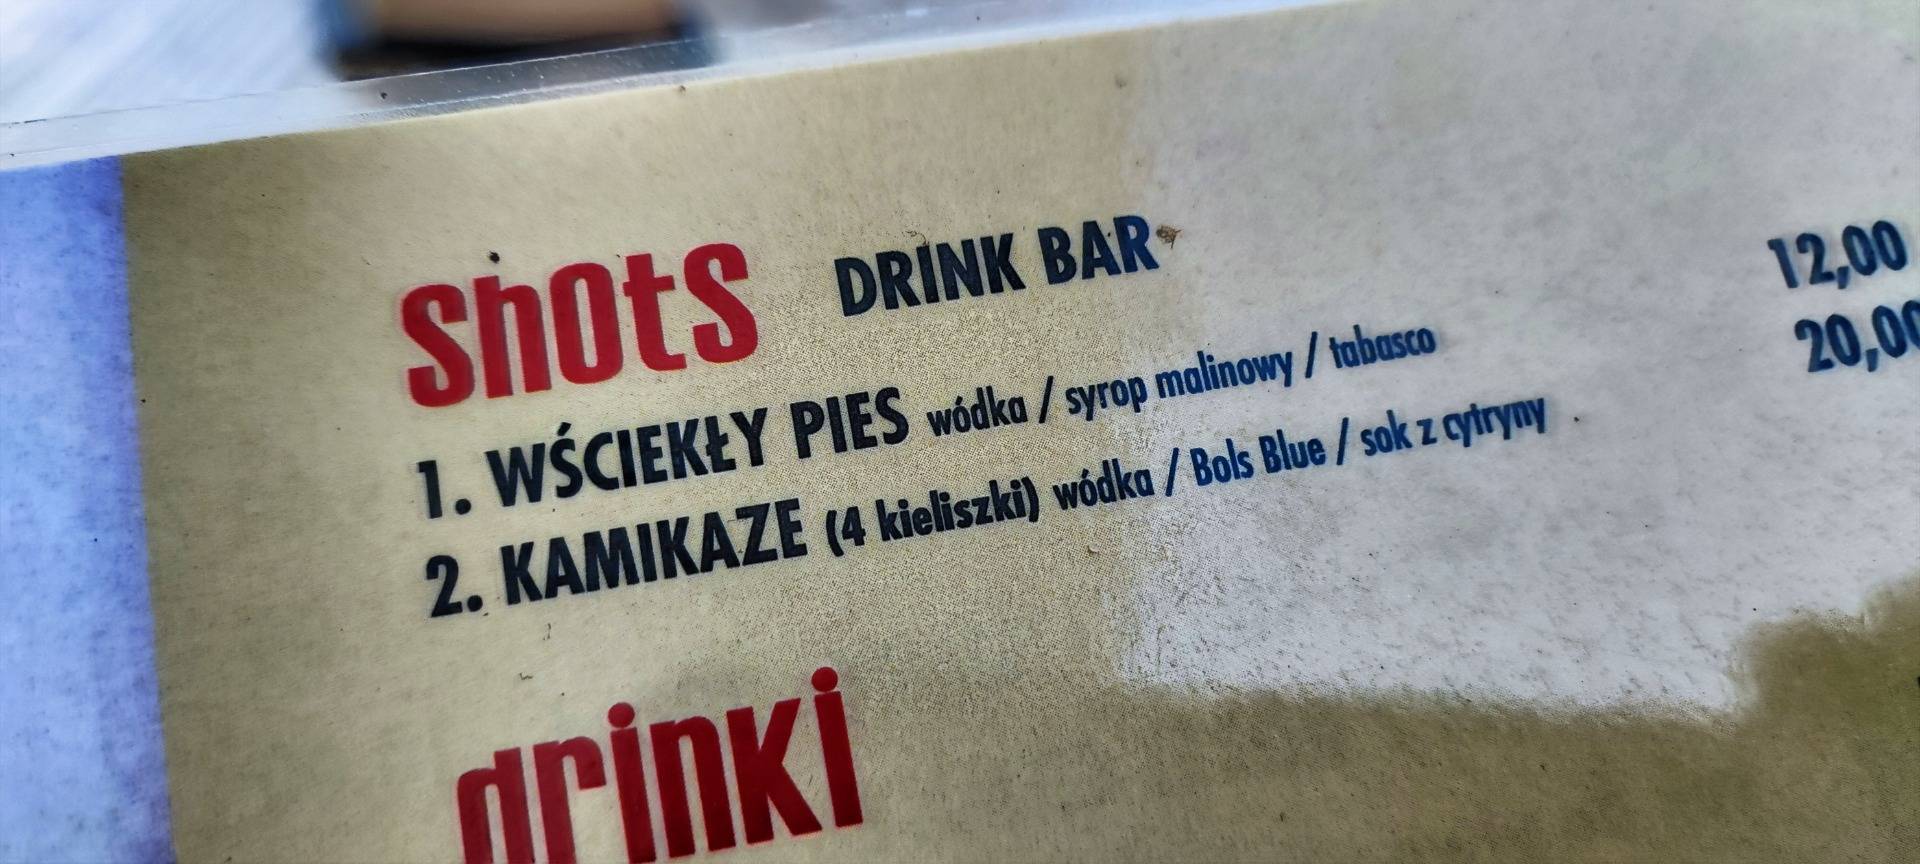 The drink Kamikaze